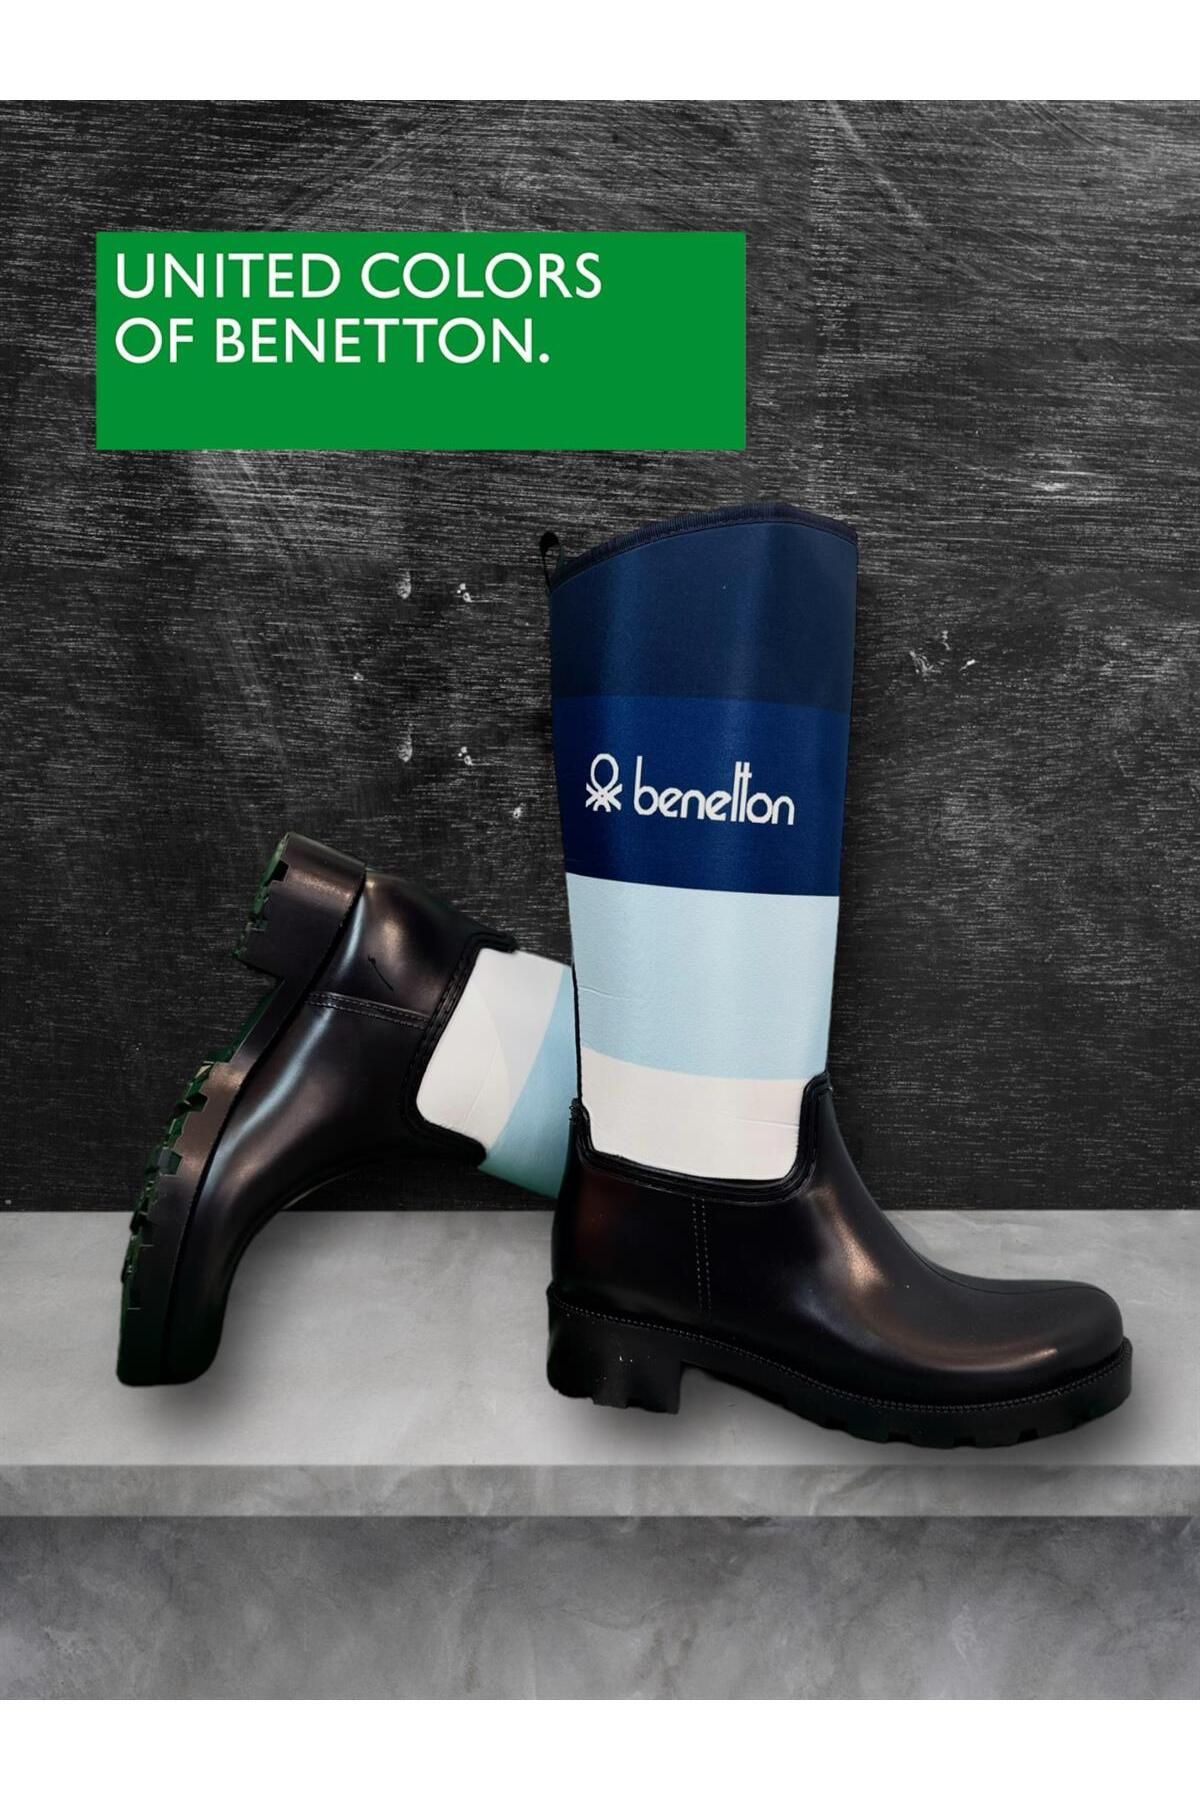 Benetton BN-50010 BENETTON BOT